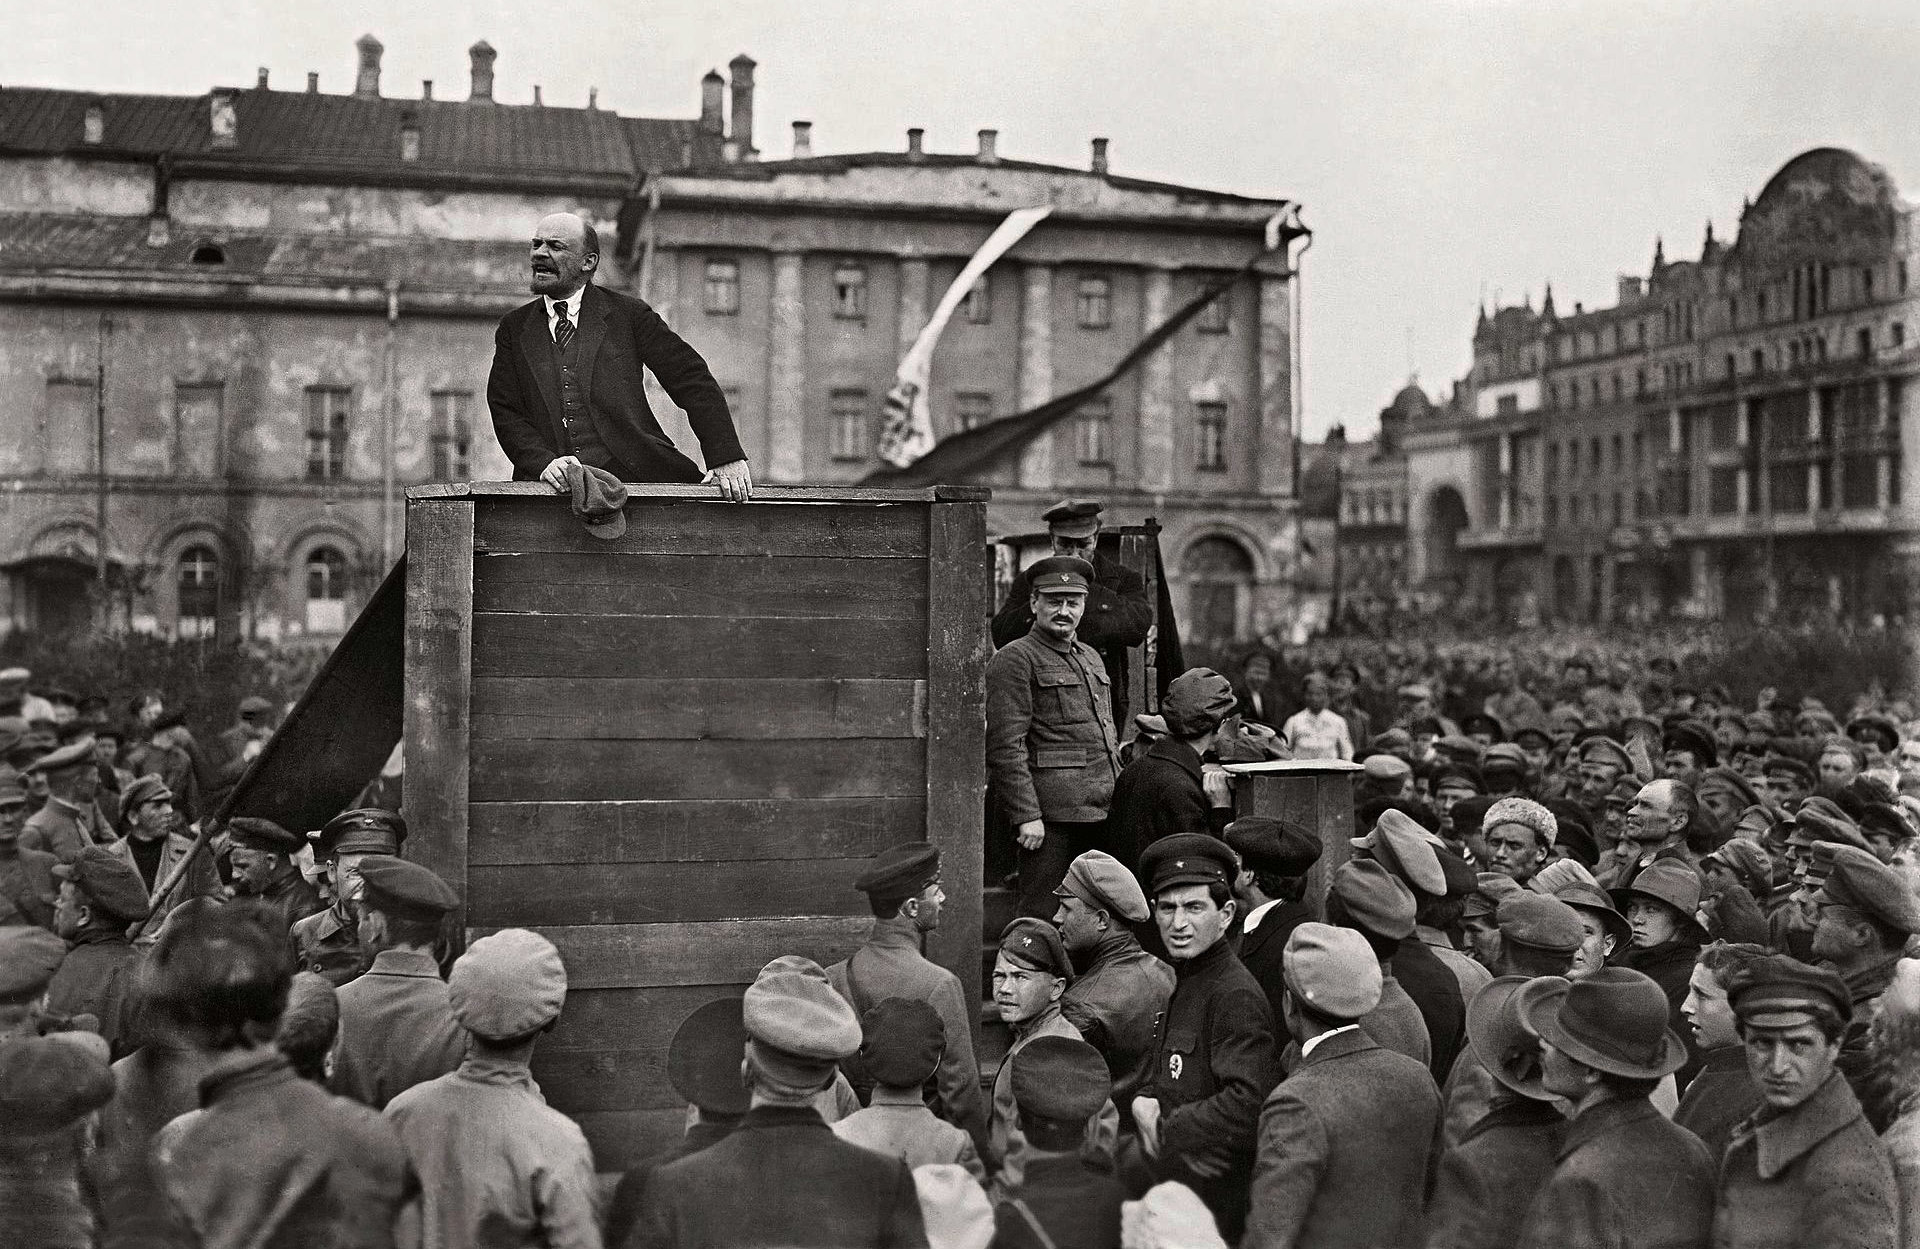 Vladimir Lenin addressing Red Army troops in 1920